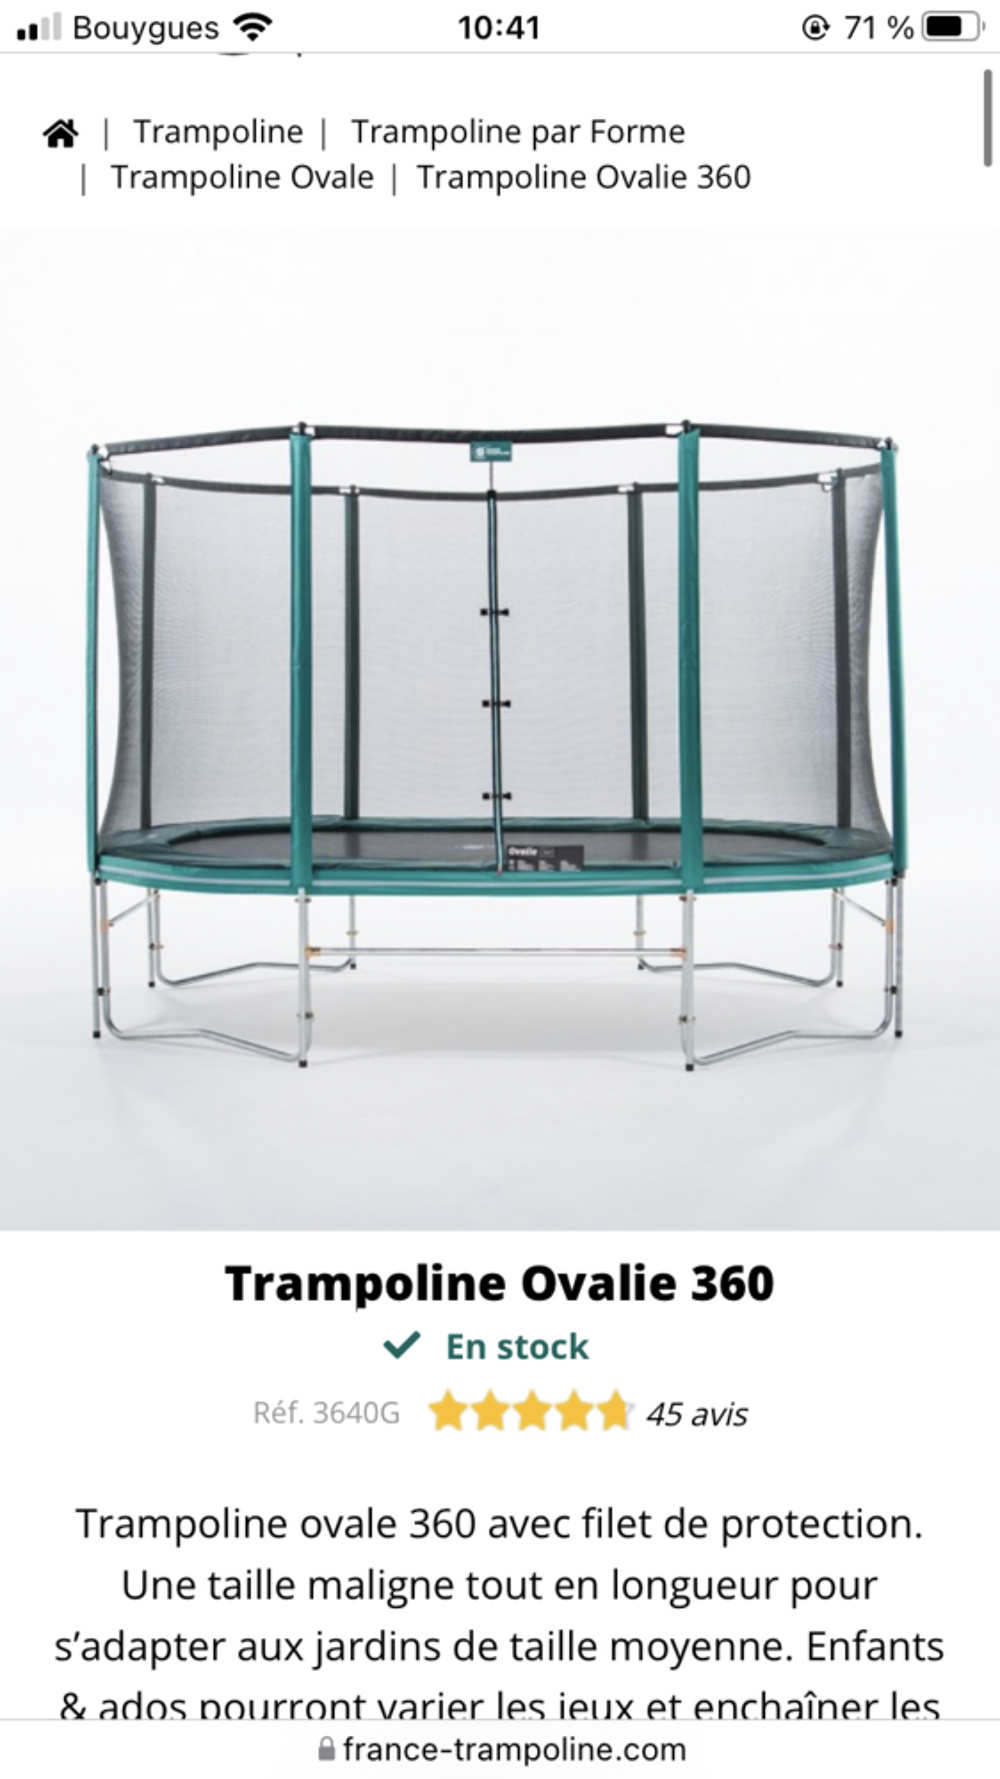 trampoline de chez France Trampoline. Sports